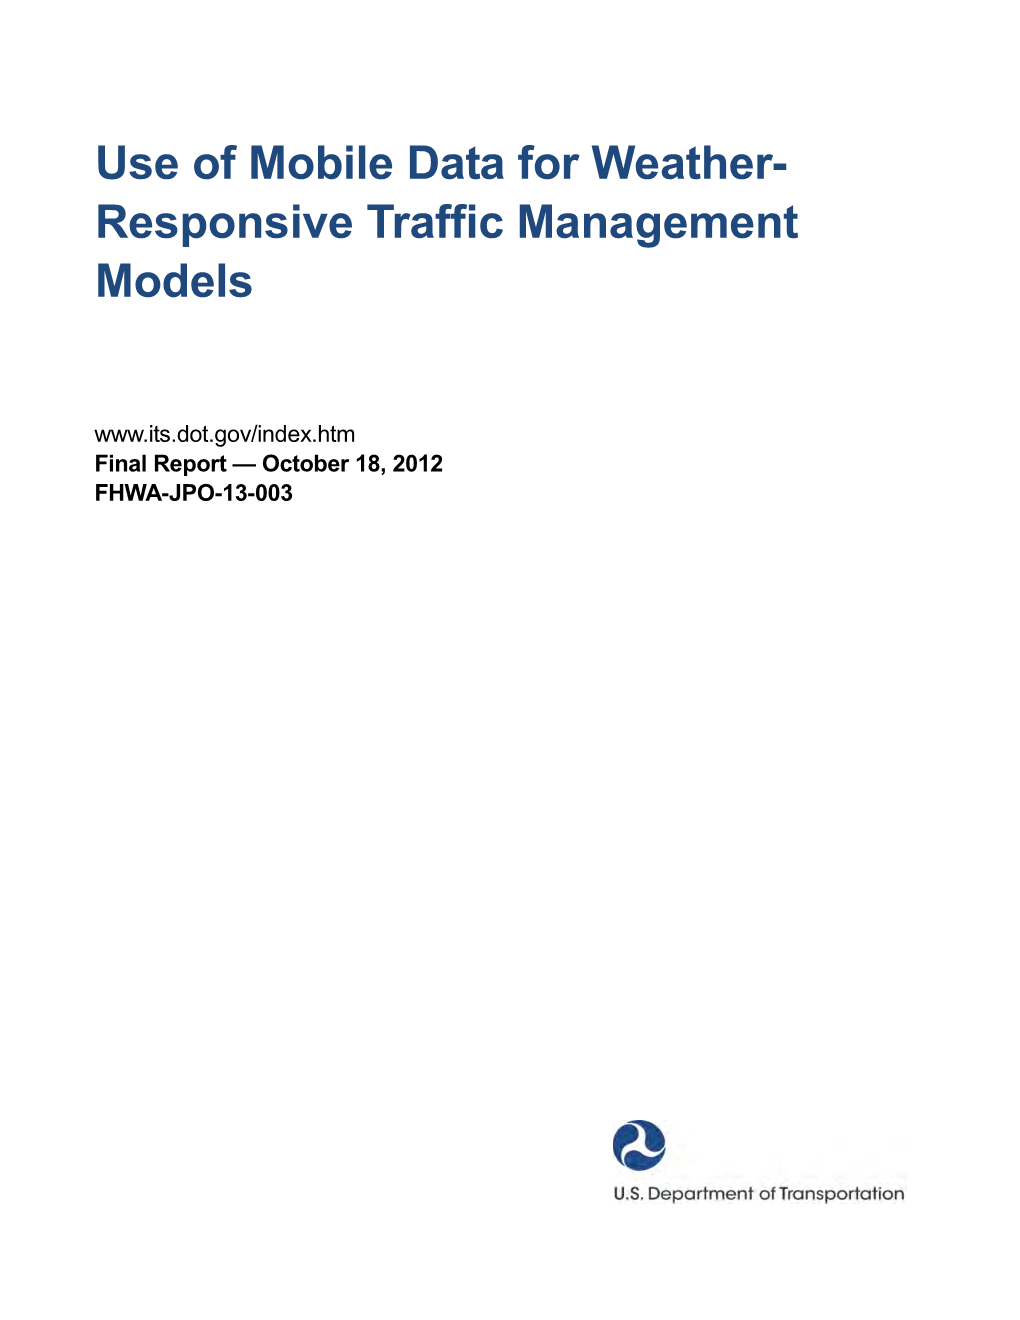 Responsive Traffic Management Models 6